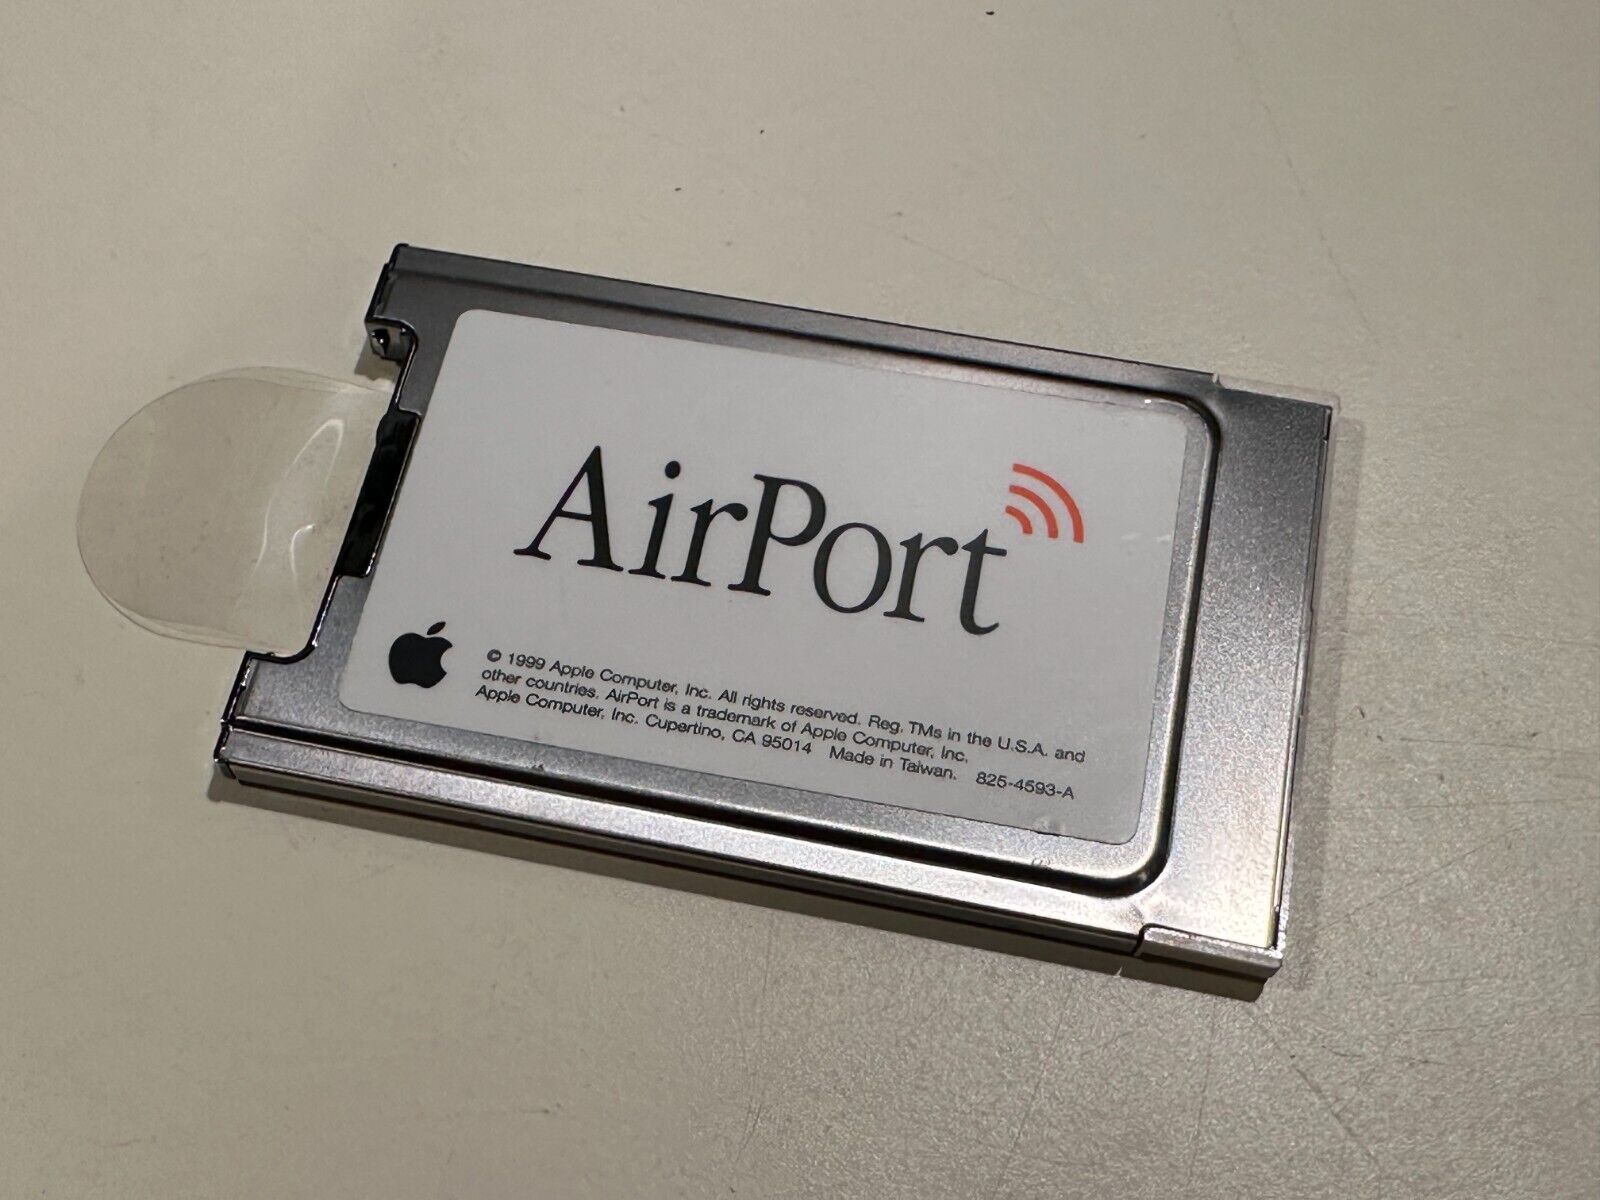 Original Apple Airport Card eMac iMac iBook G3 Wireless WiFi 802.11b PCMCIA